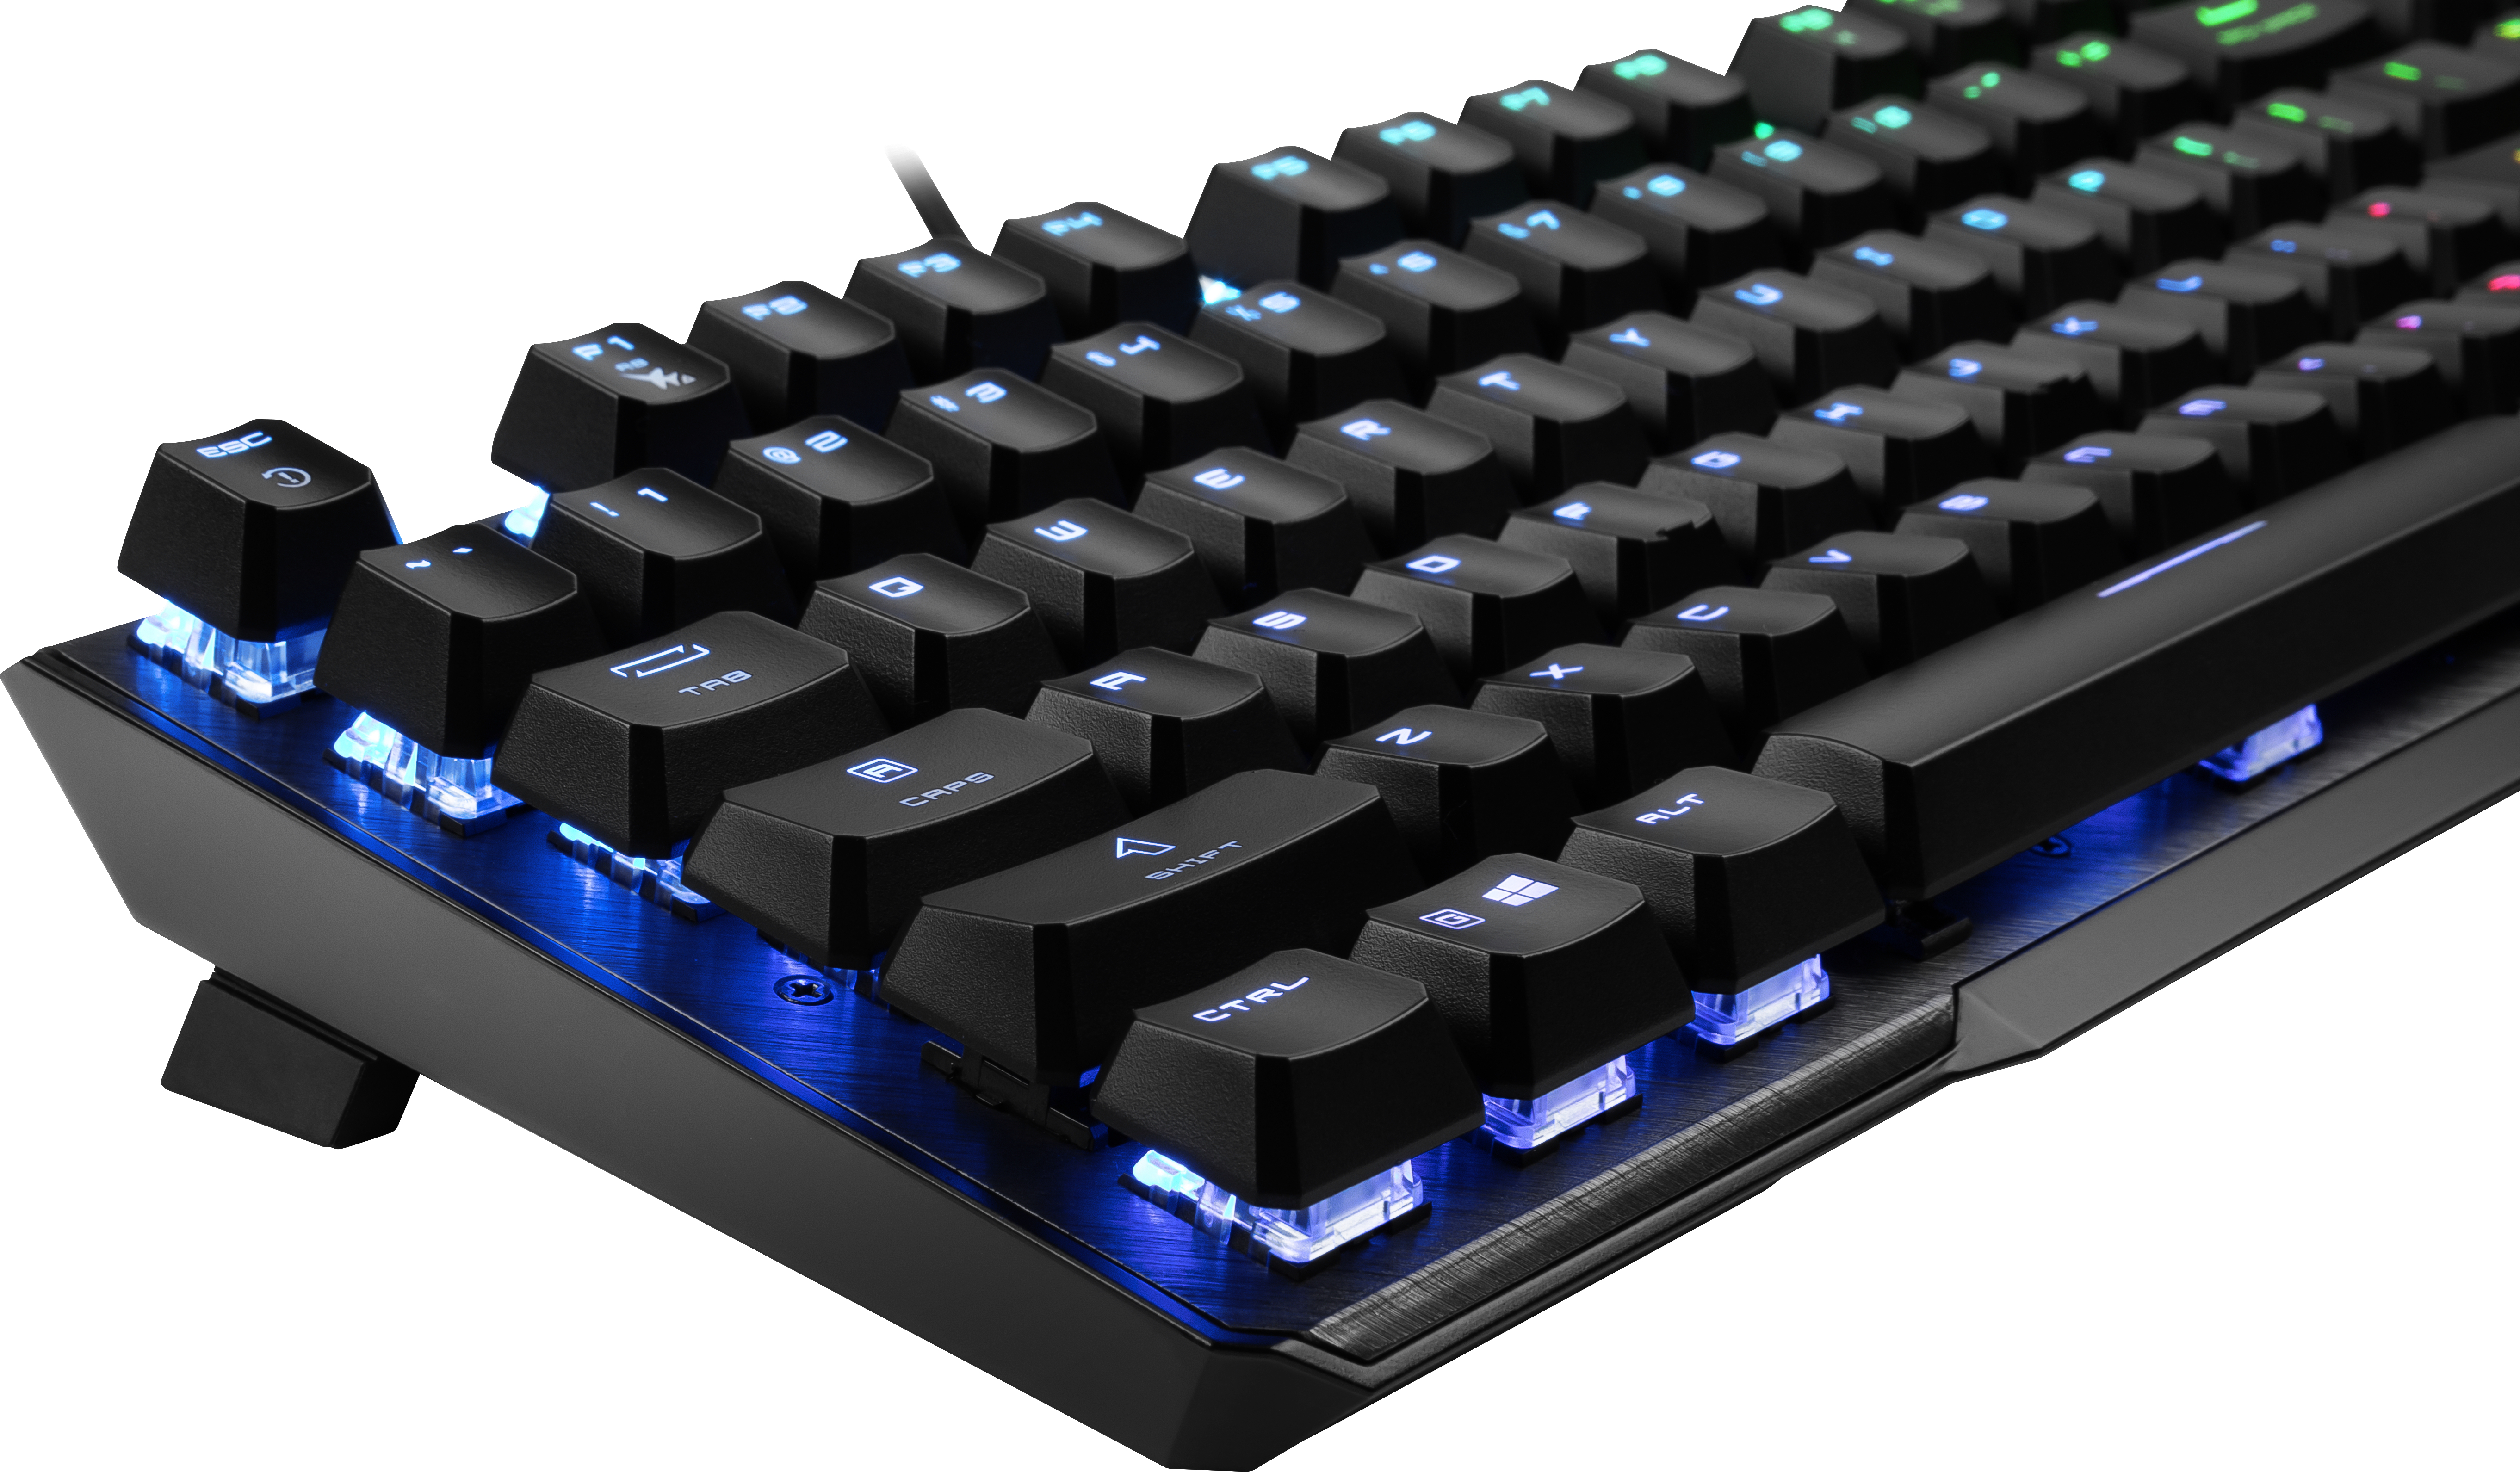 Kailh Layout, White Elite Tastatur schwarz, RGB Vigor QWERTZ (kabelgebunden, pro Taste) Gaming Switch, BW 50 Box DE GK MSI